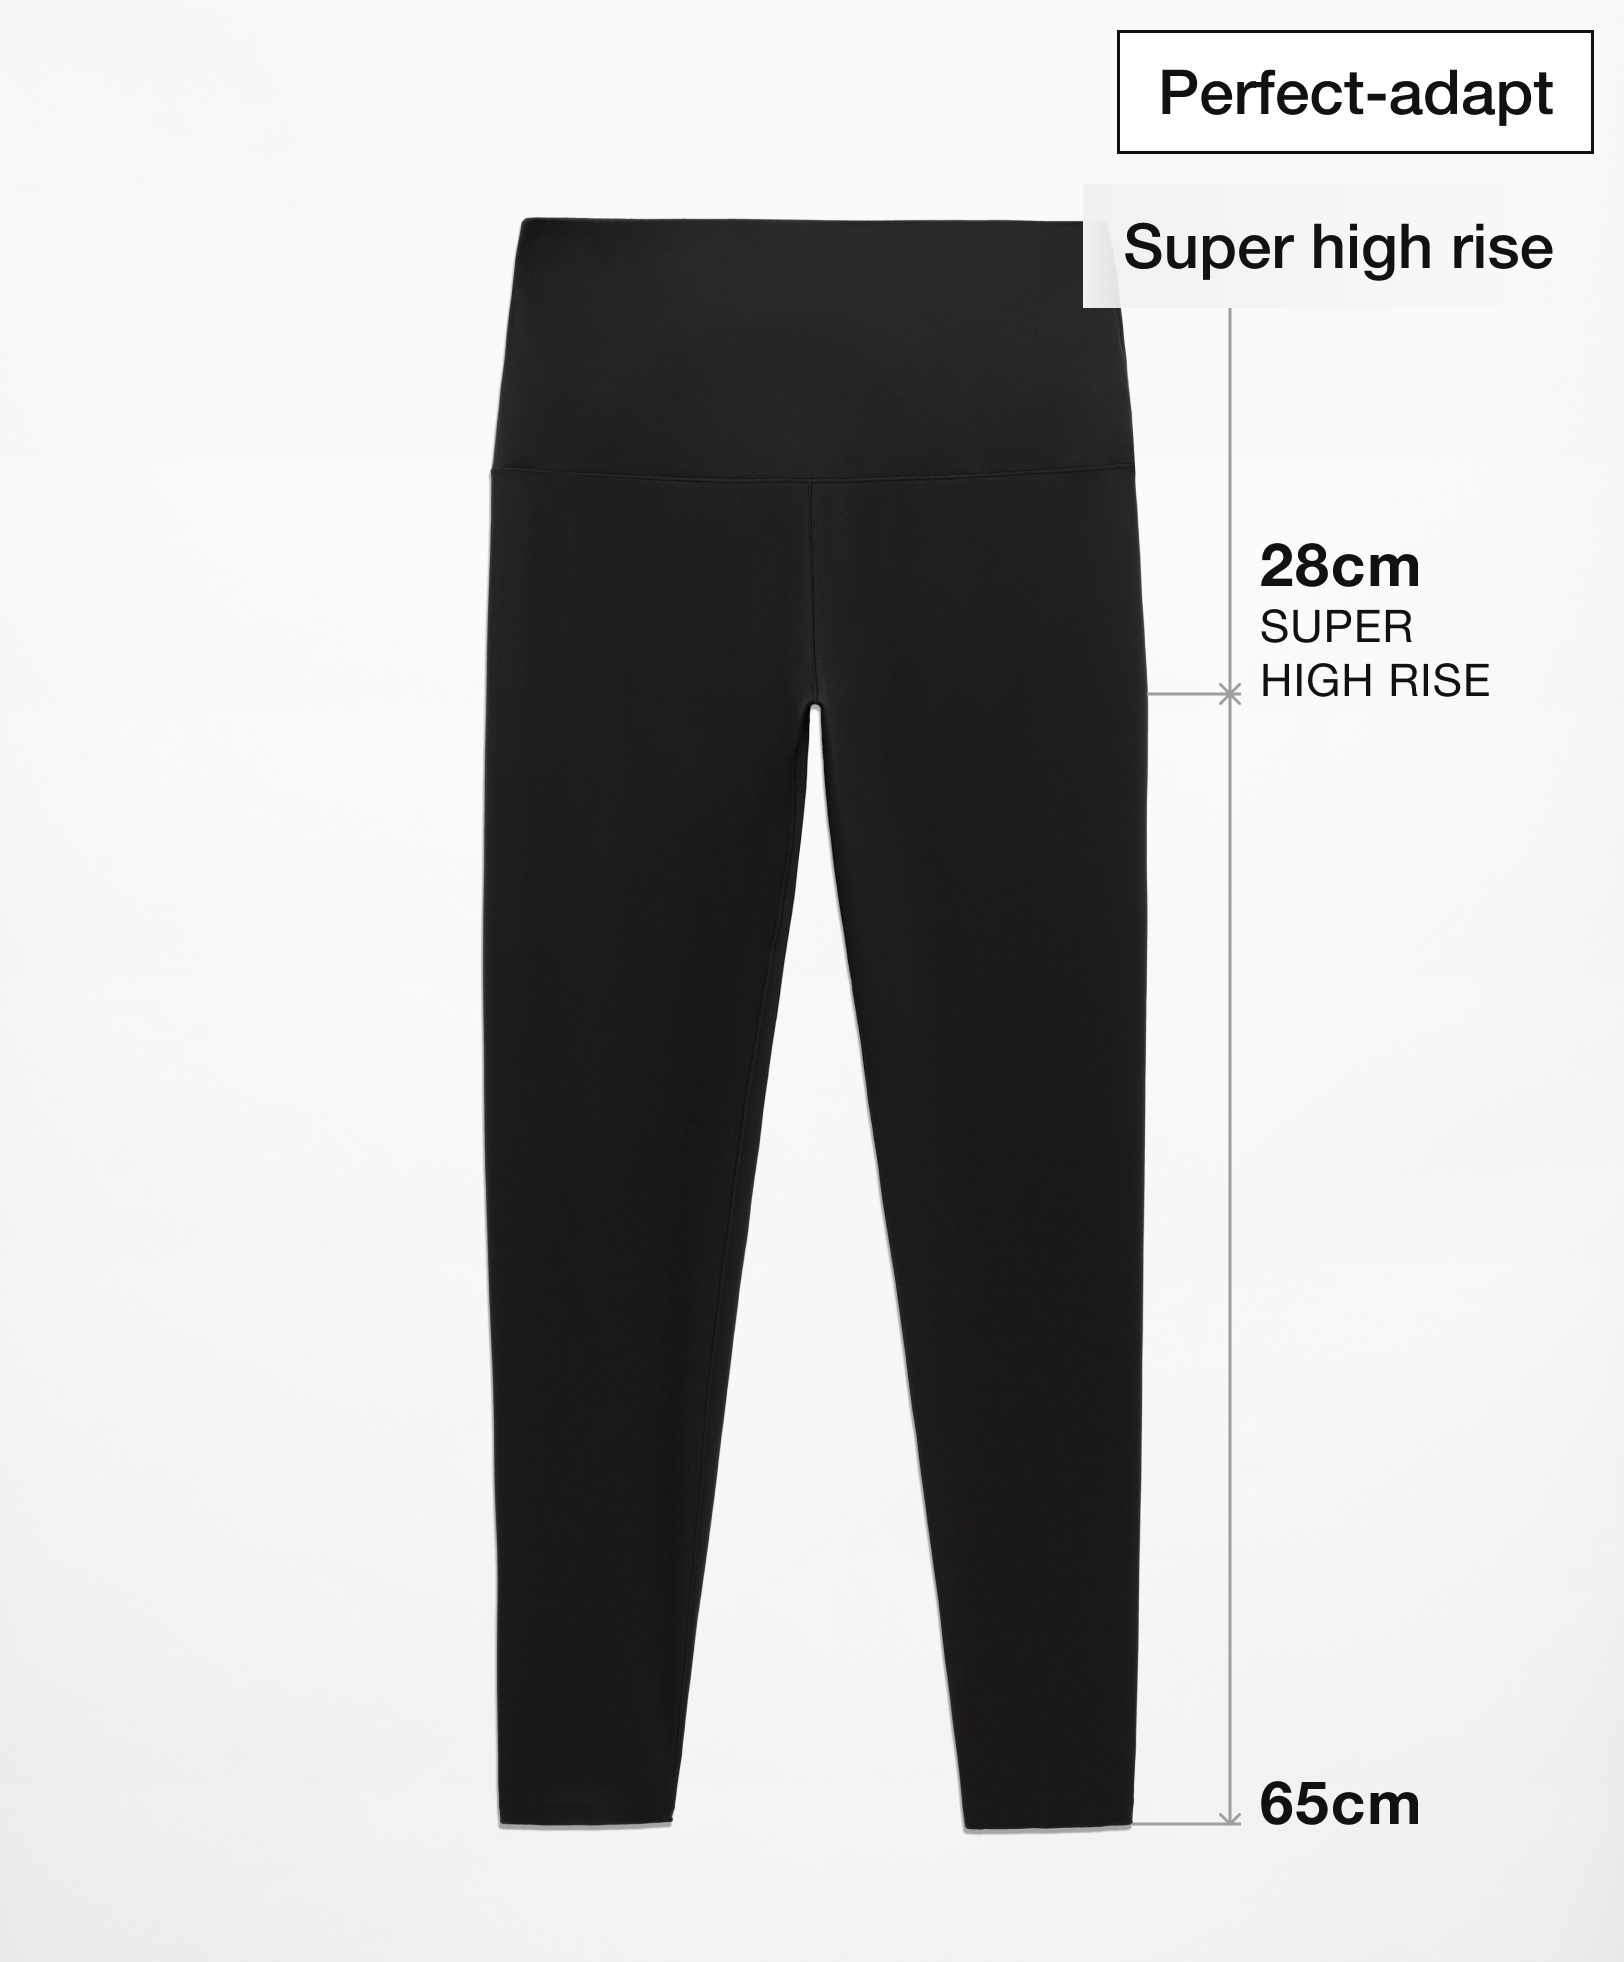 Knöchellange Perfect Adapt Leggings, Super High Rise, 65 cm